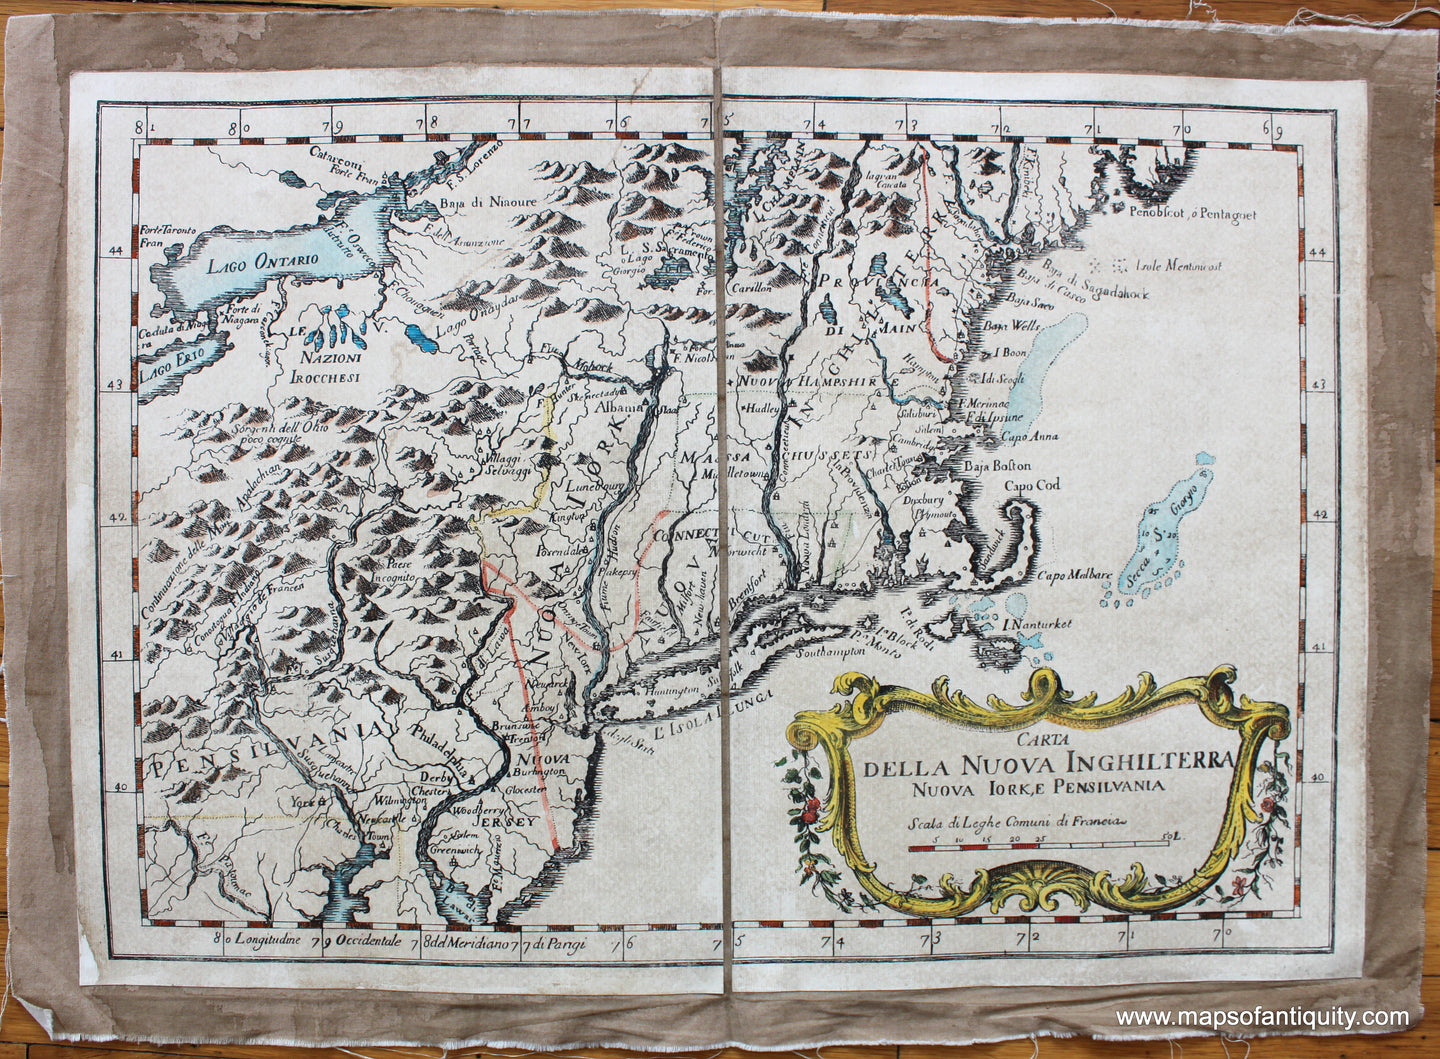 Digitally-Engraved-Specialty-Reproductions-Antique-Map-Carta-Della-Nuova-Inghilterra-Nuova-Iork-e-Pensilvania-New-England-New-York-Pennsylvania-Northeast-United-States-Maps-of-Antiquity